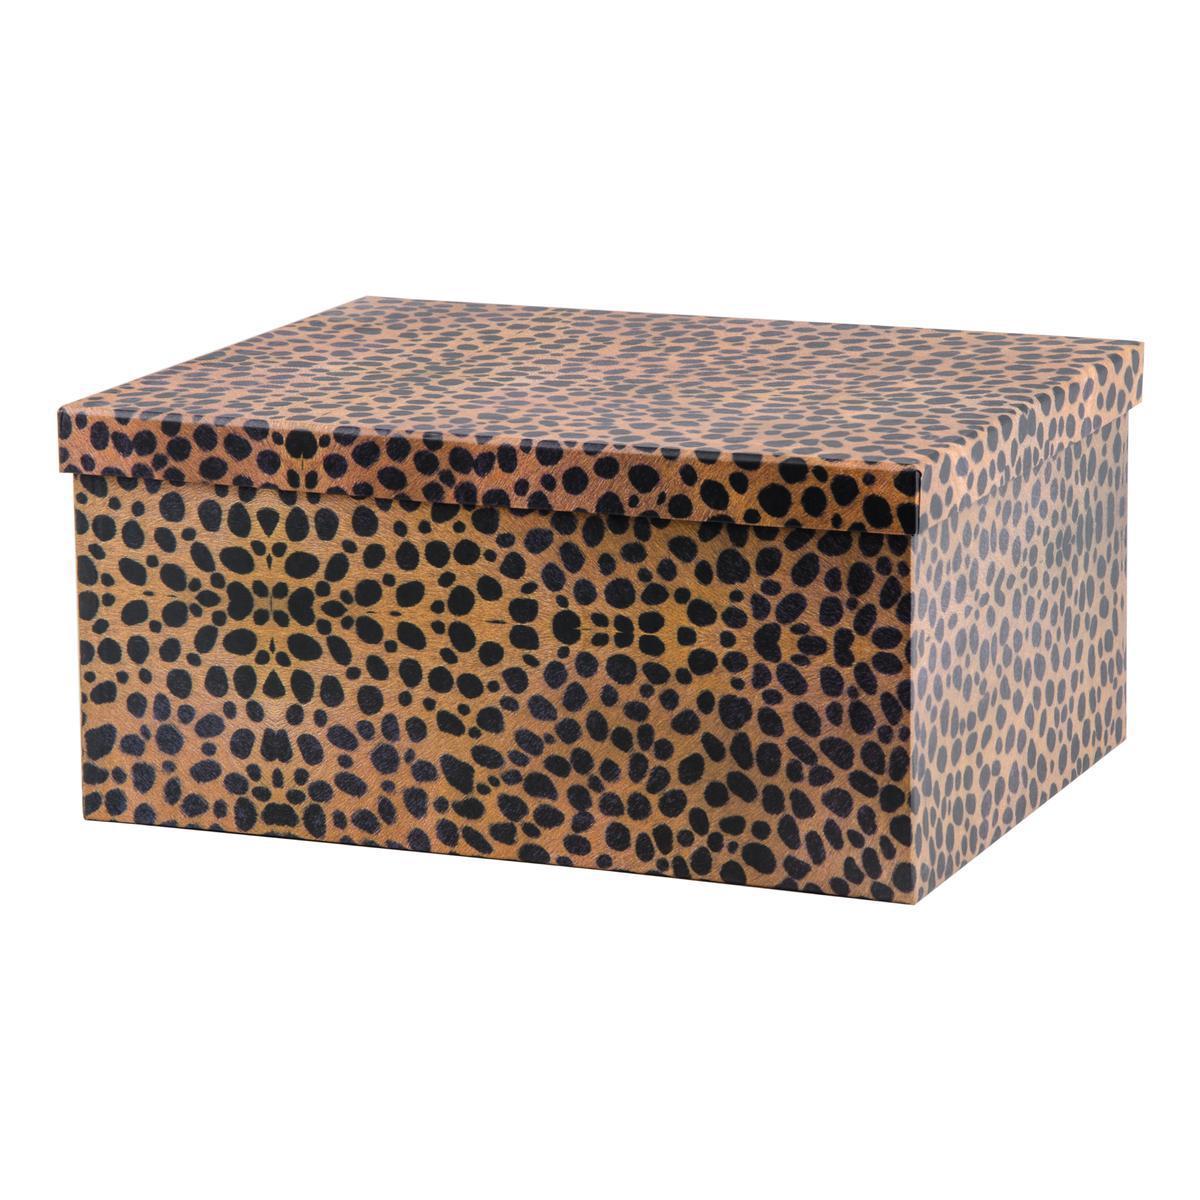 Boite tigré en carton - 36 x 28 x 17 cm - Noir et marron